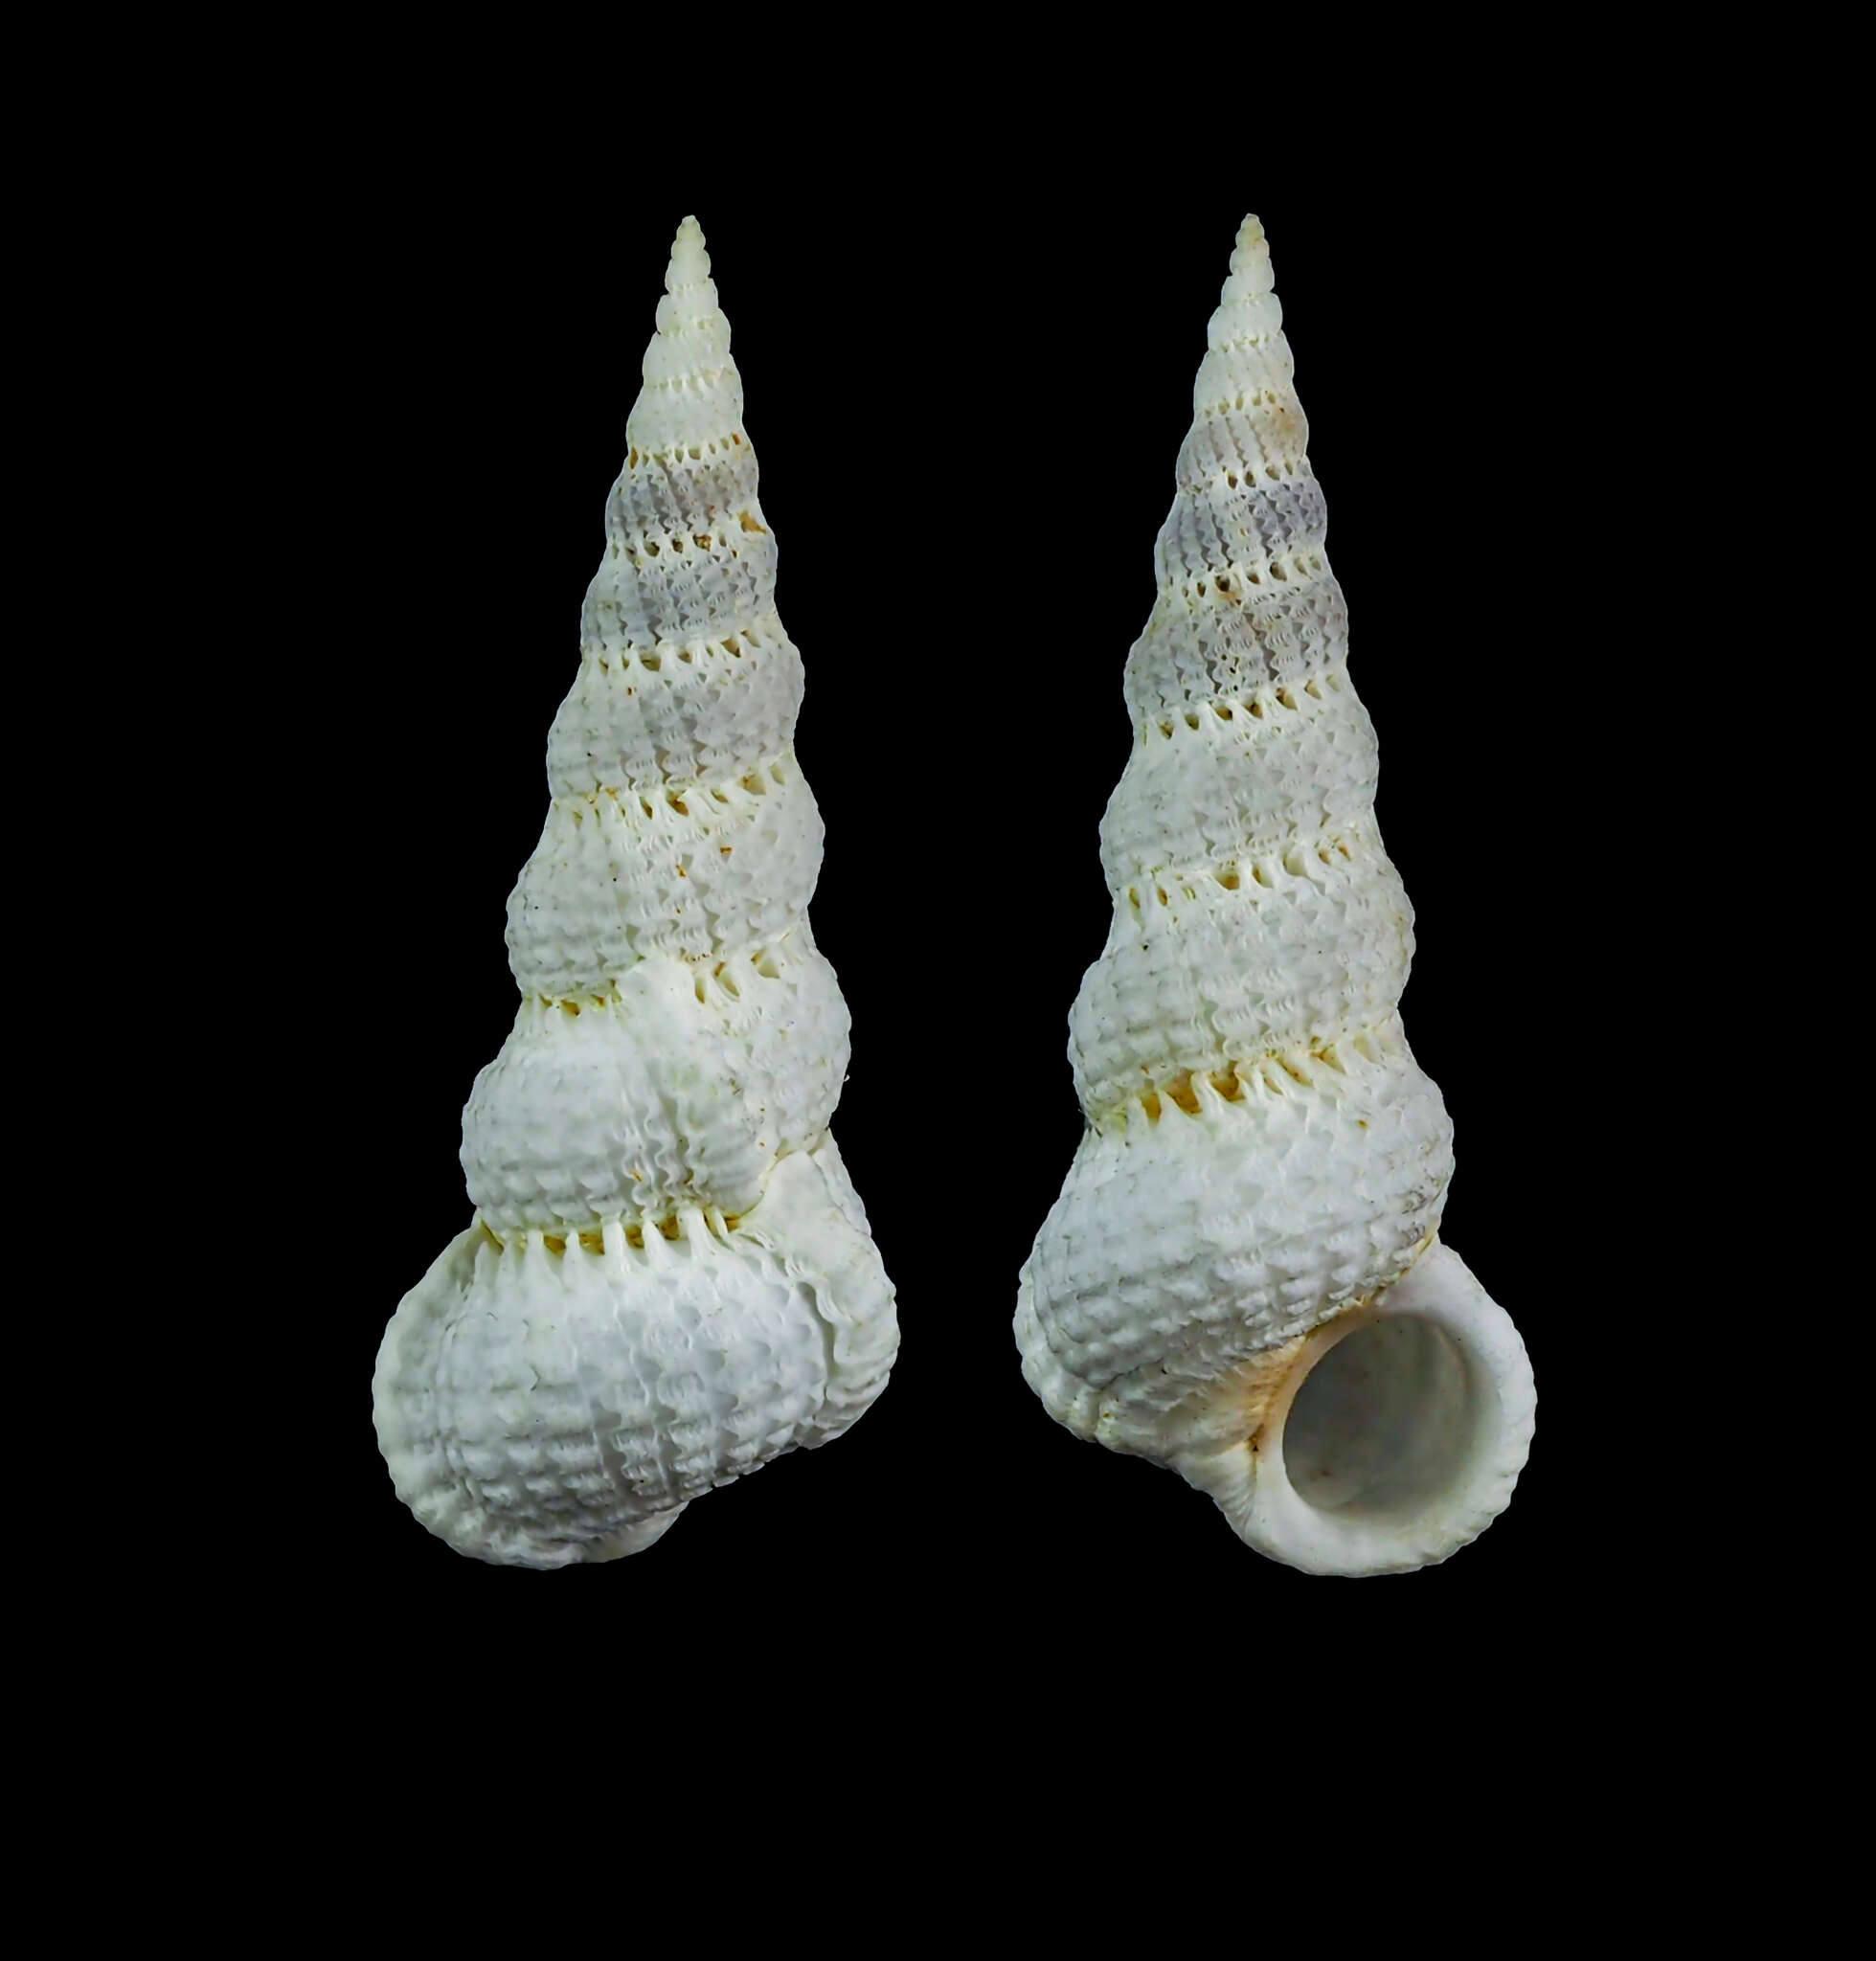 Sivun Cirsotrema varicosum (Lamarck 1822) kuva